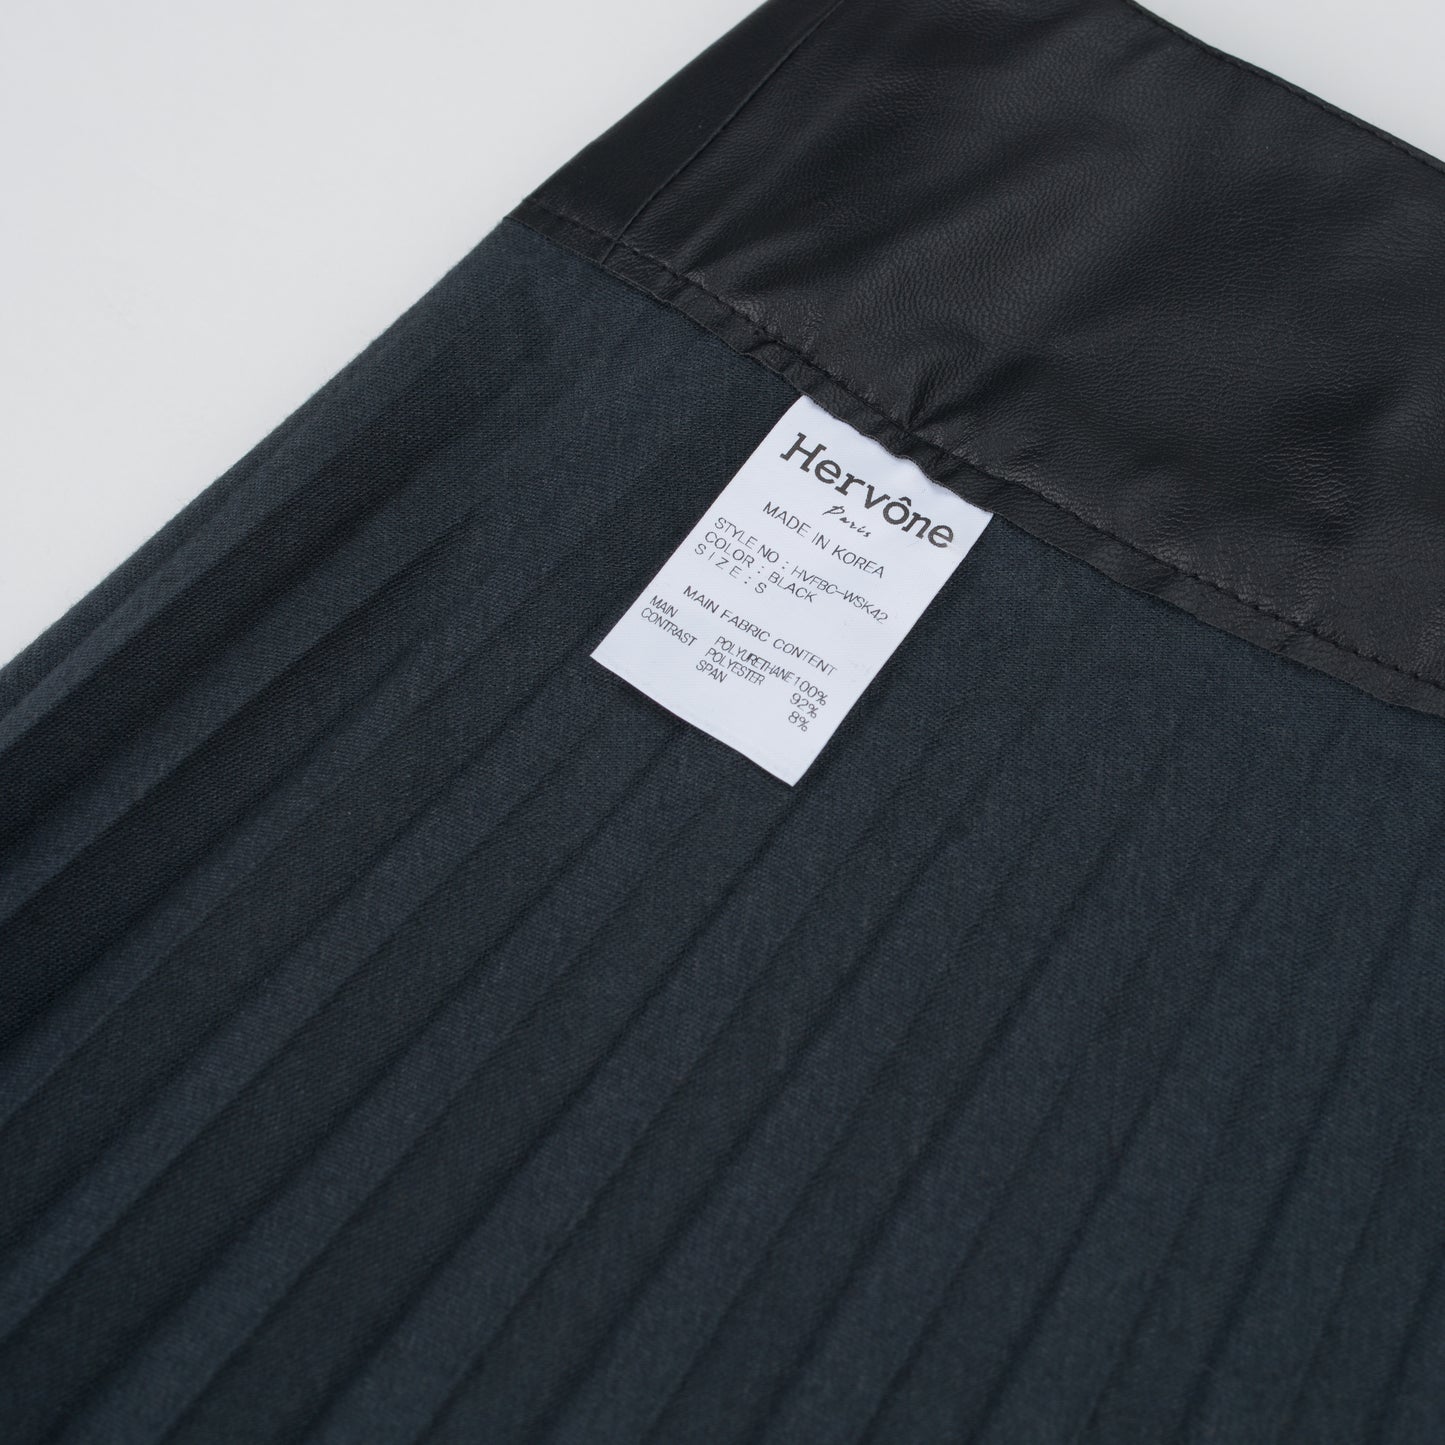 Women's Agathe Leather Wrap Skirt Black